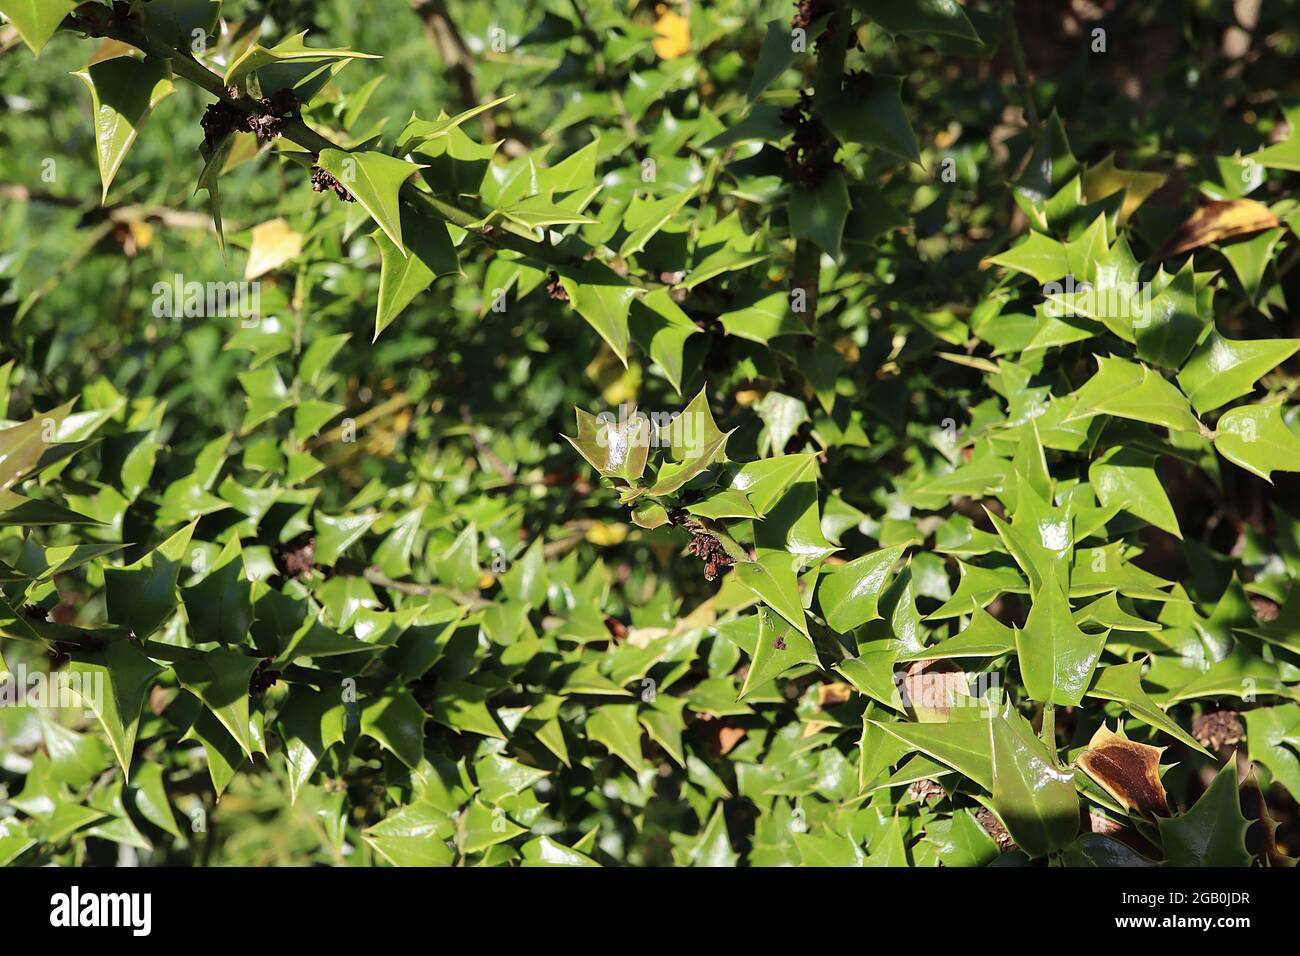 Ilex pernyi Pernys holly – mid green triangular spiny leaves,  June, England, UK Stock Photo